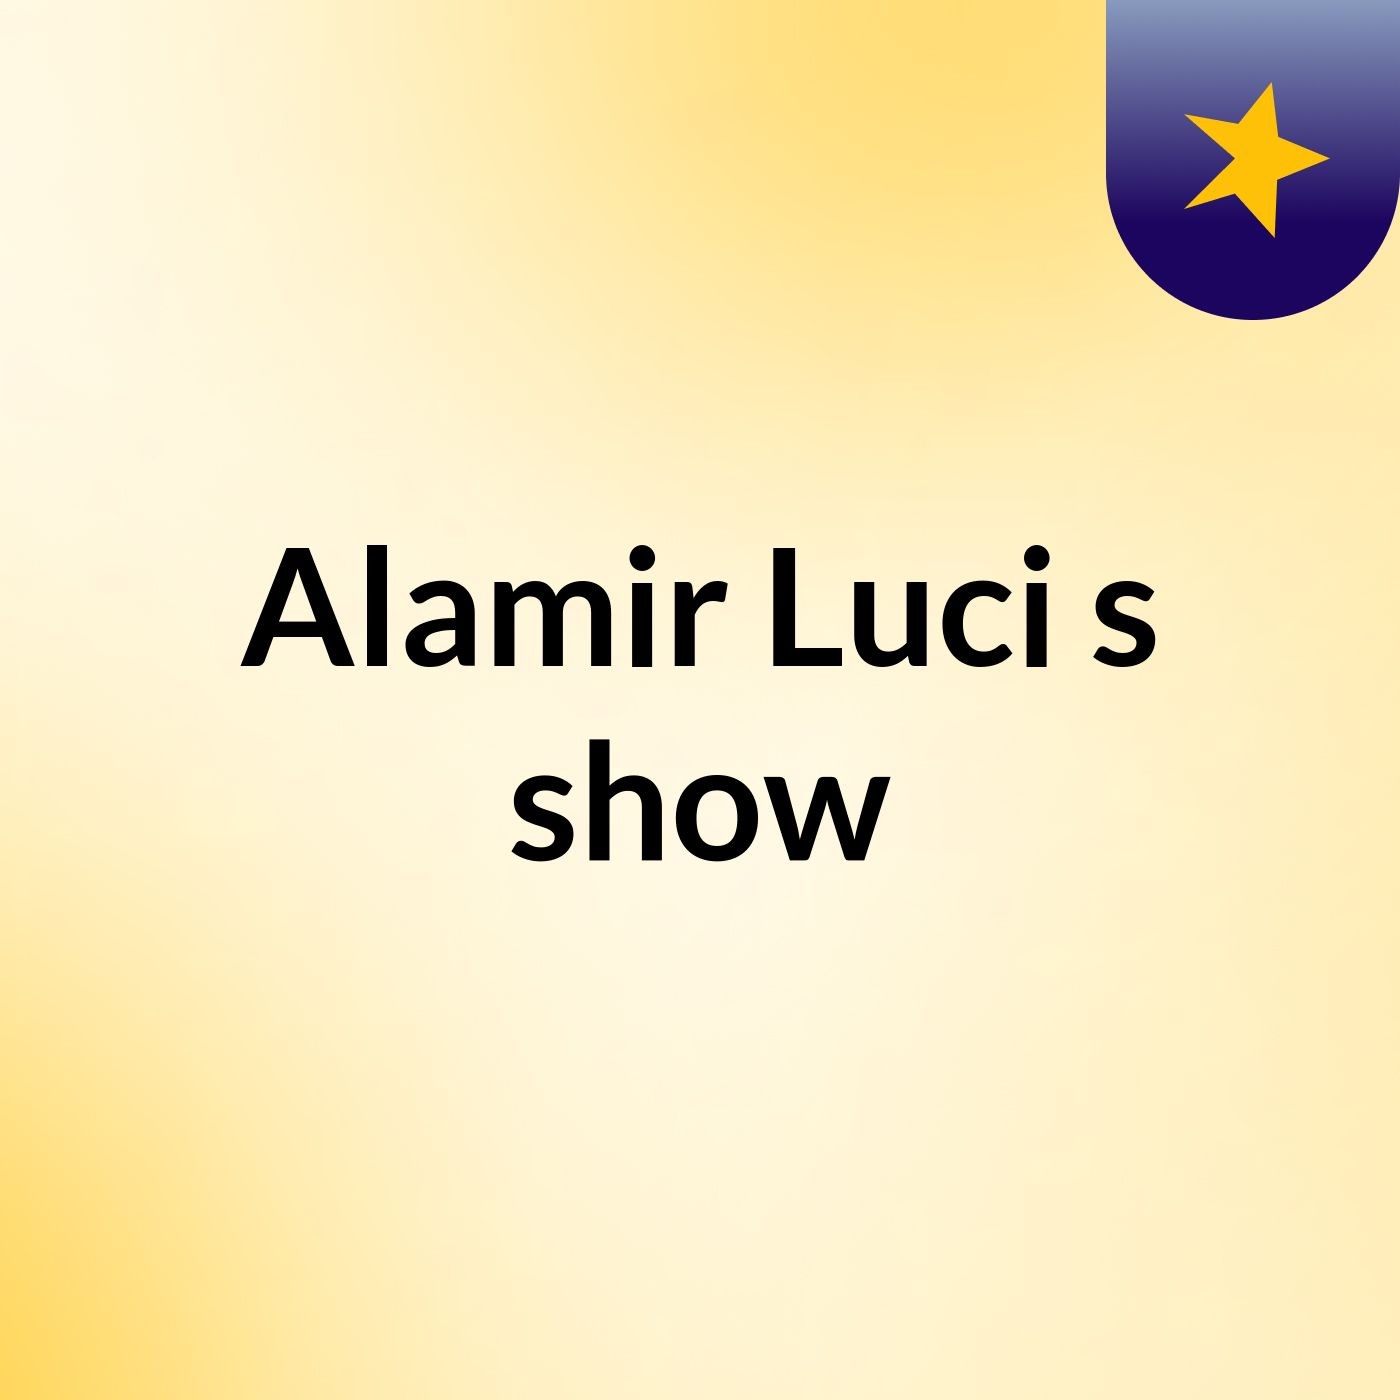 Alamir Luci's show